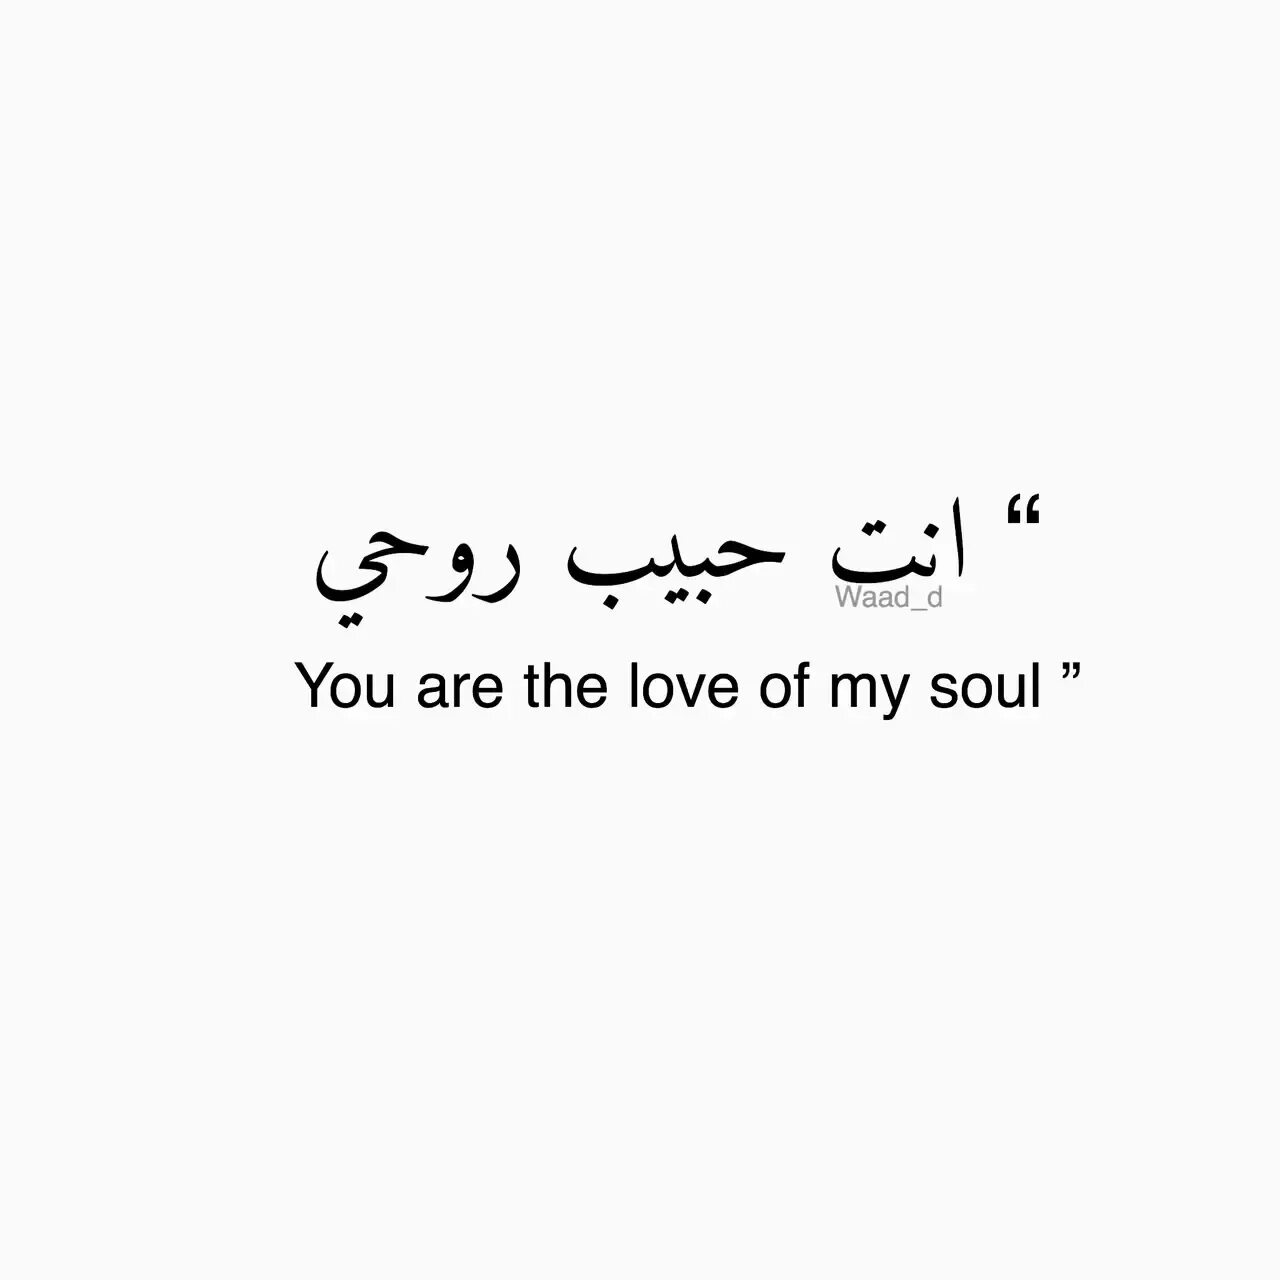 Статус на арабском. Красивые слова на арабском. Красивые фразы на арабском. Арабские фразы на арабском. Красивые надписи на арабском языке.